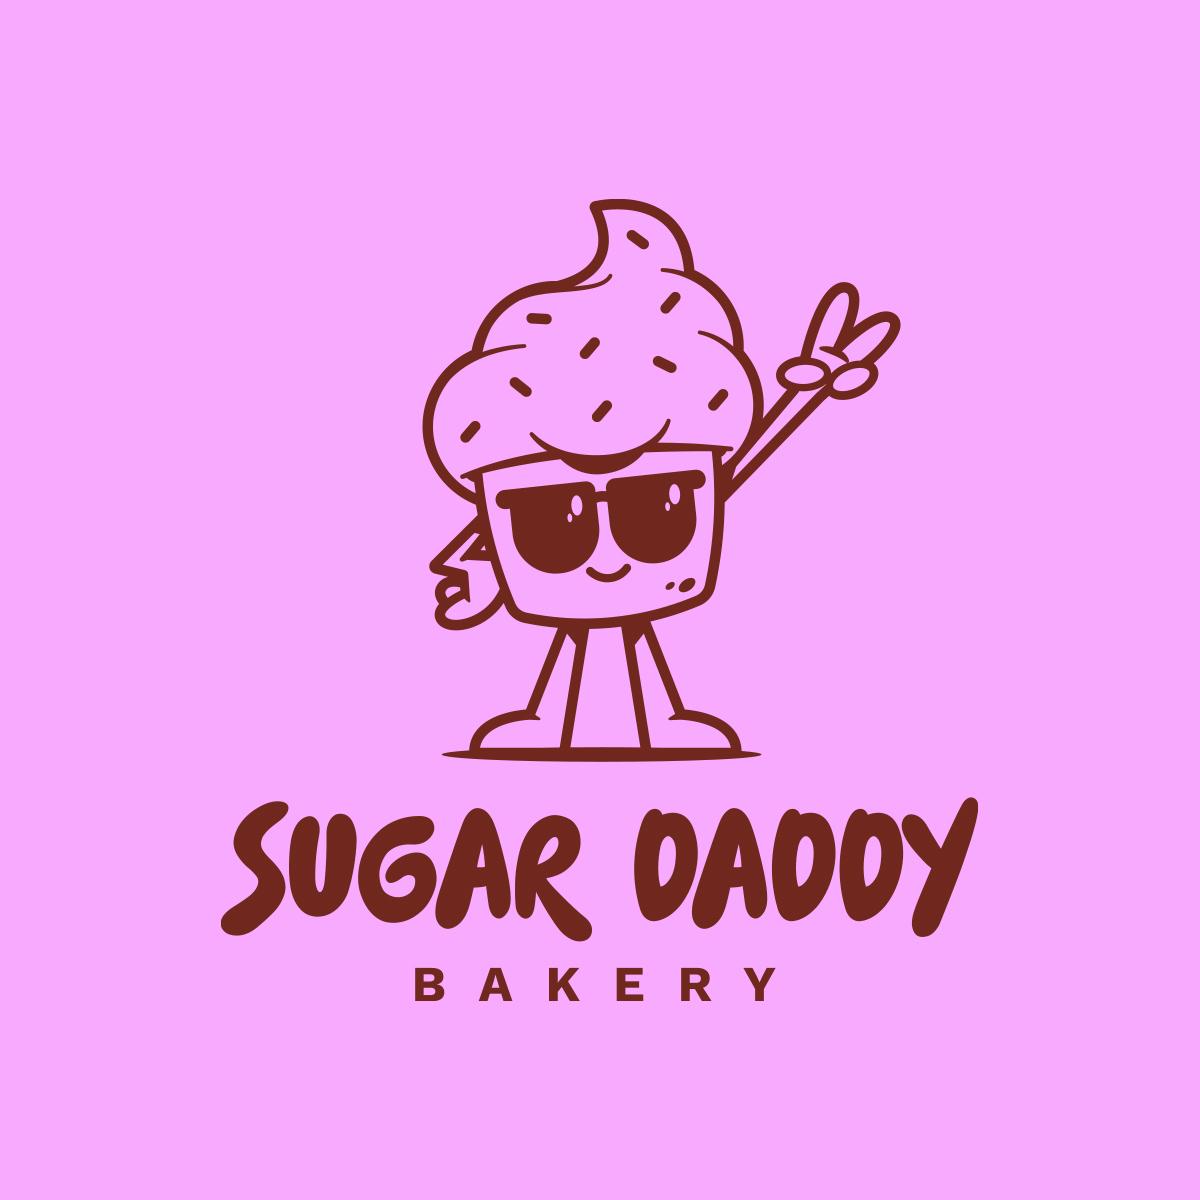 Various-Logos_Sugar